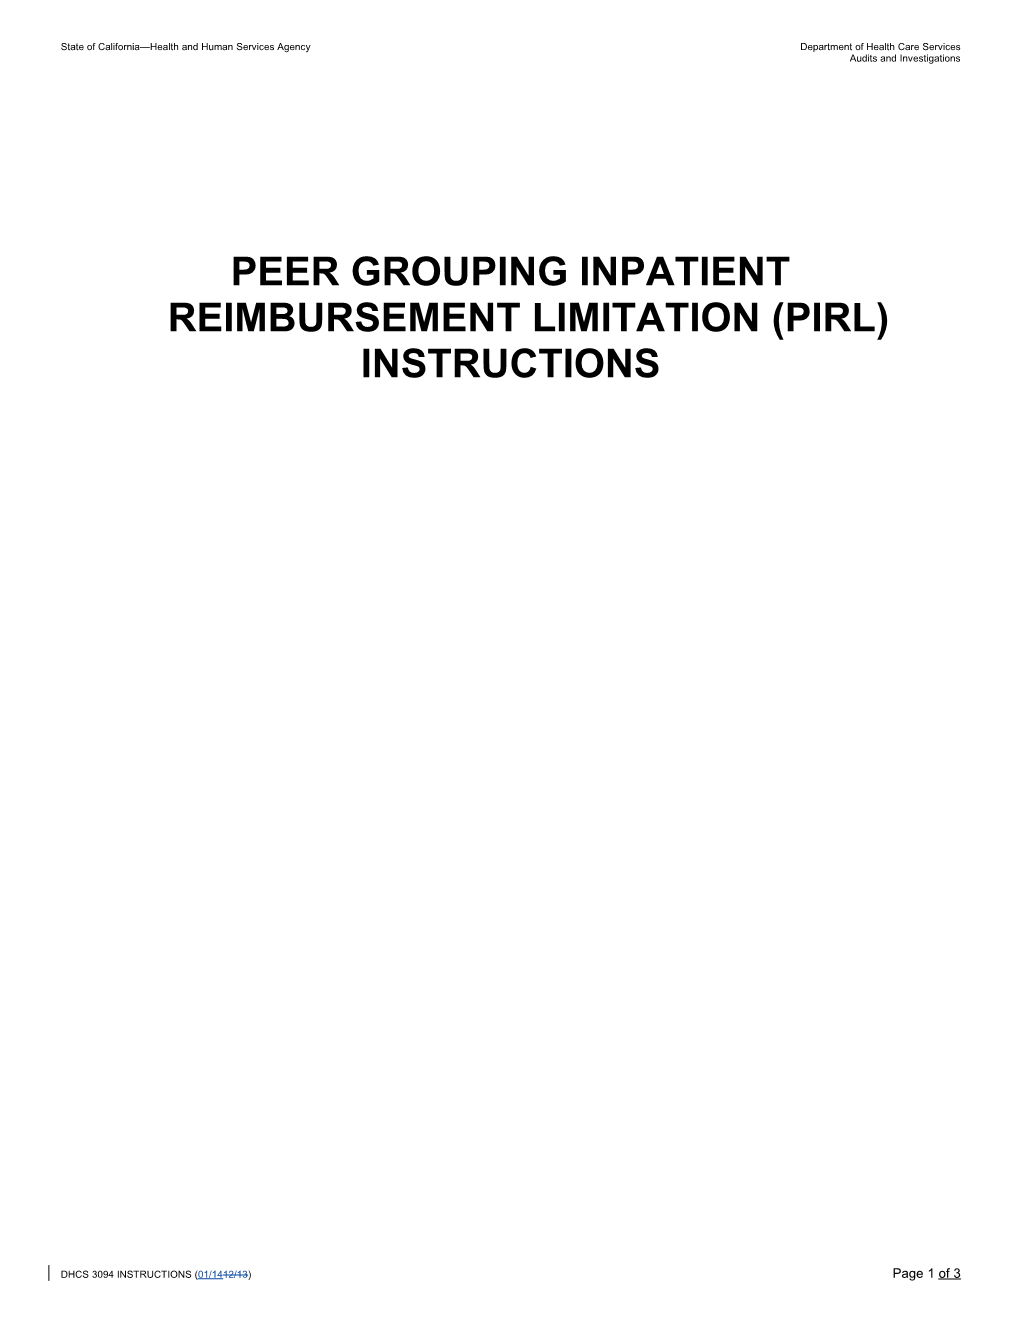 PEER GROUPING INPATIENT REIMBURSEMENT Limitation (PIRL)